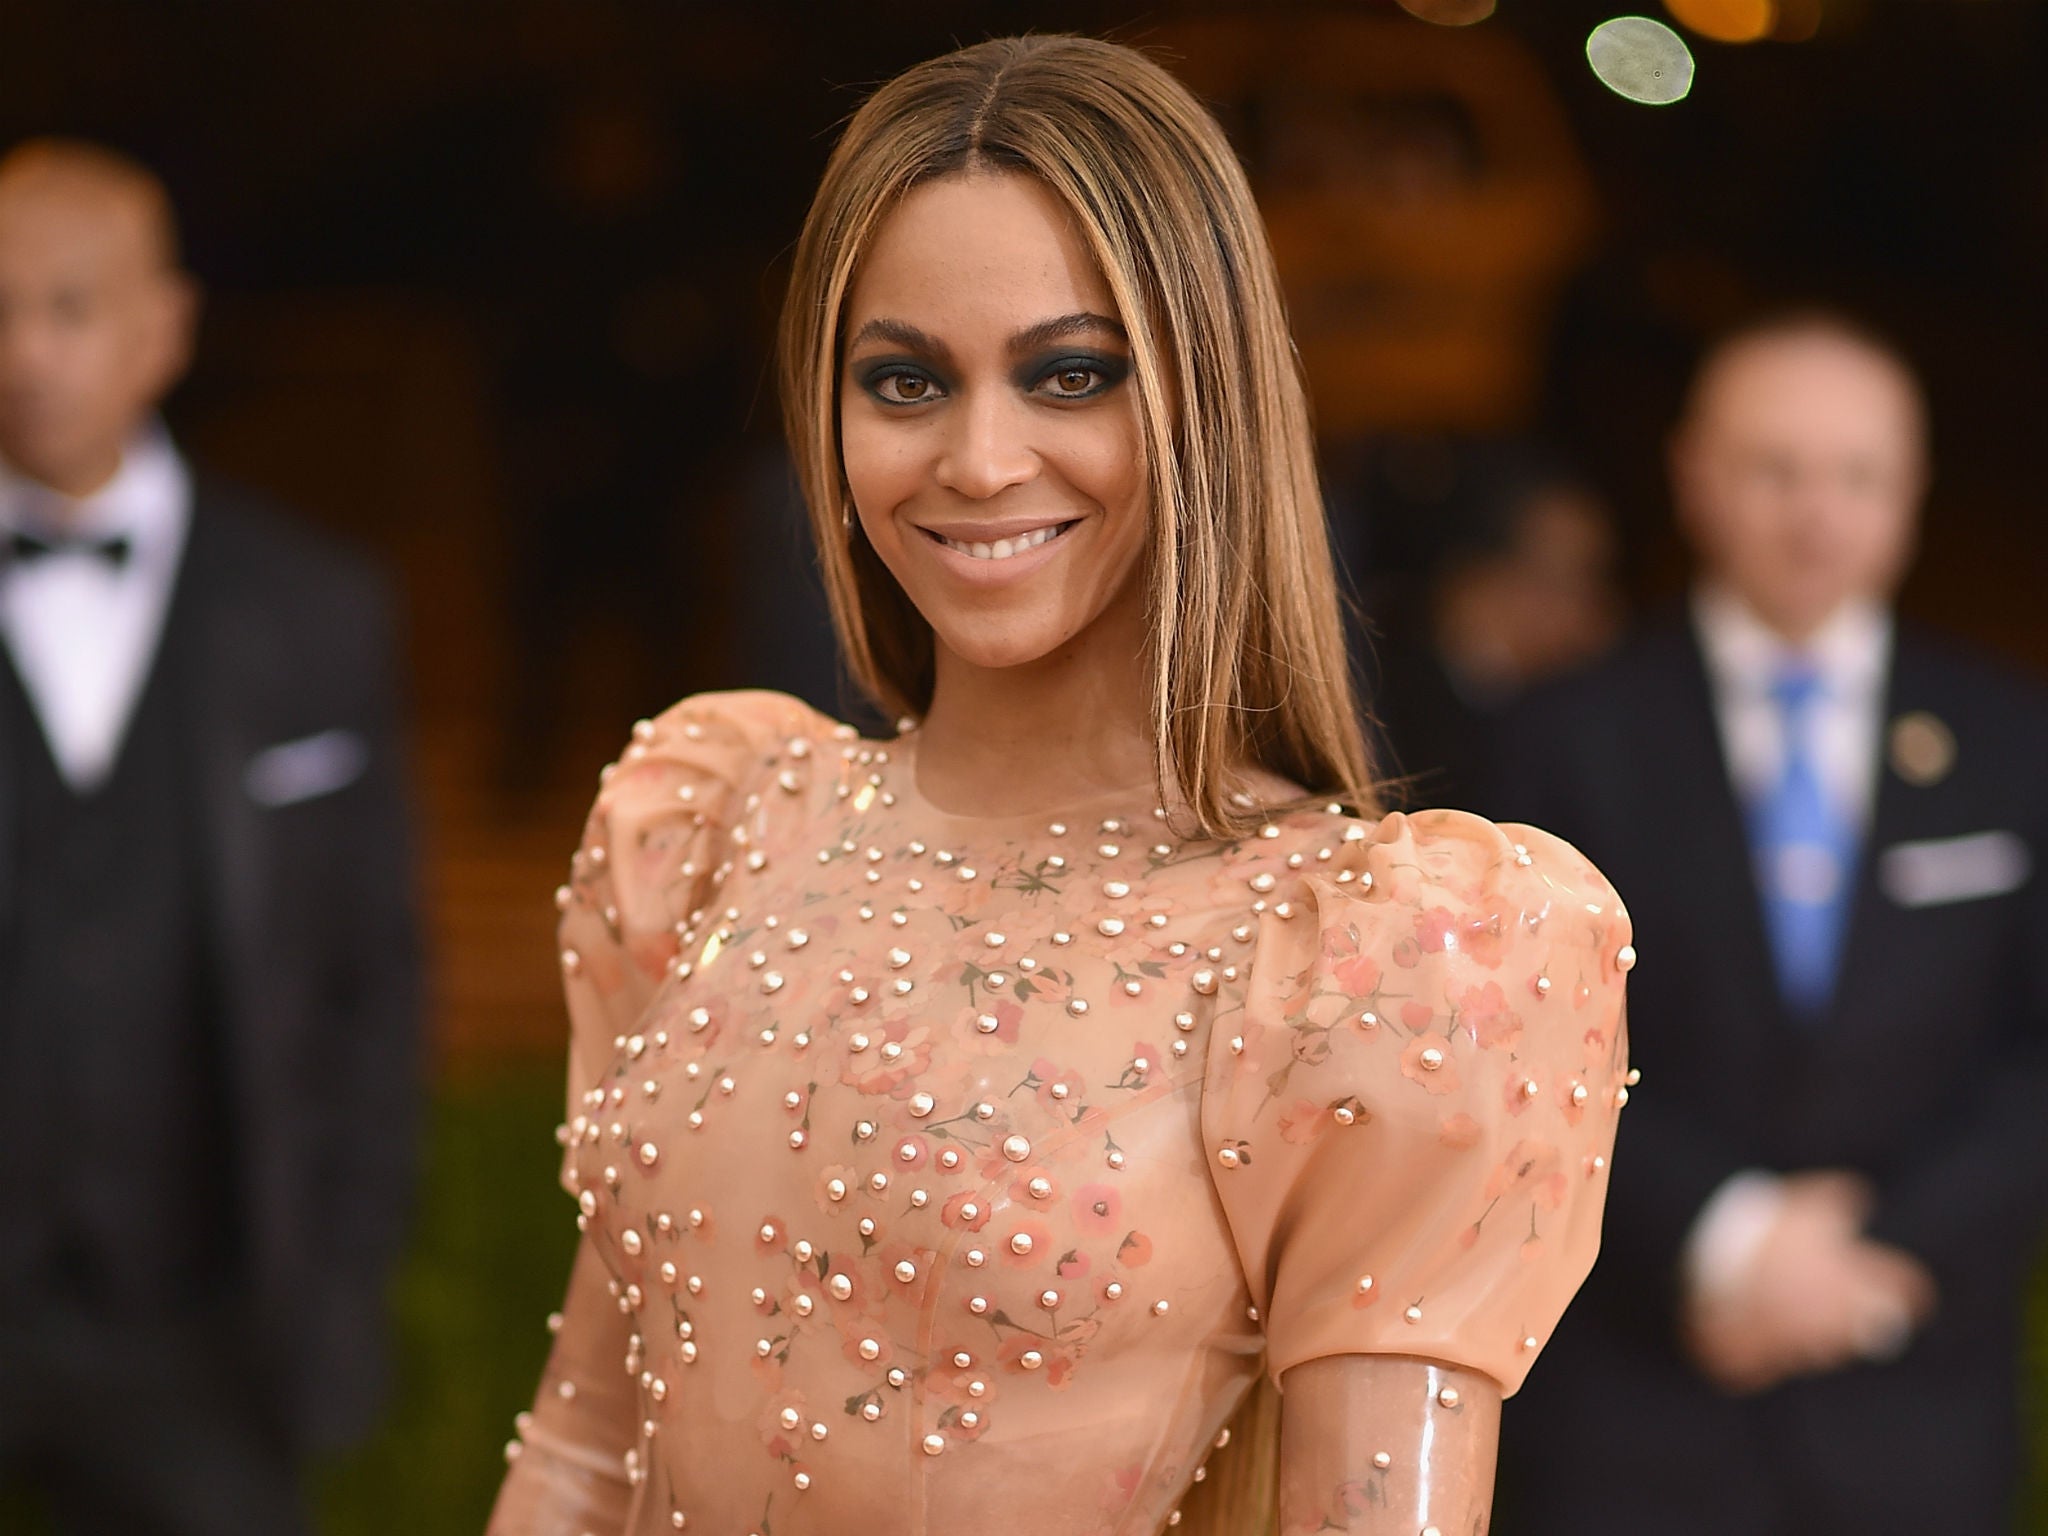 Beyoncé at the Met Gala